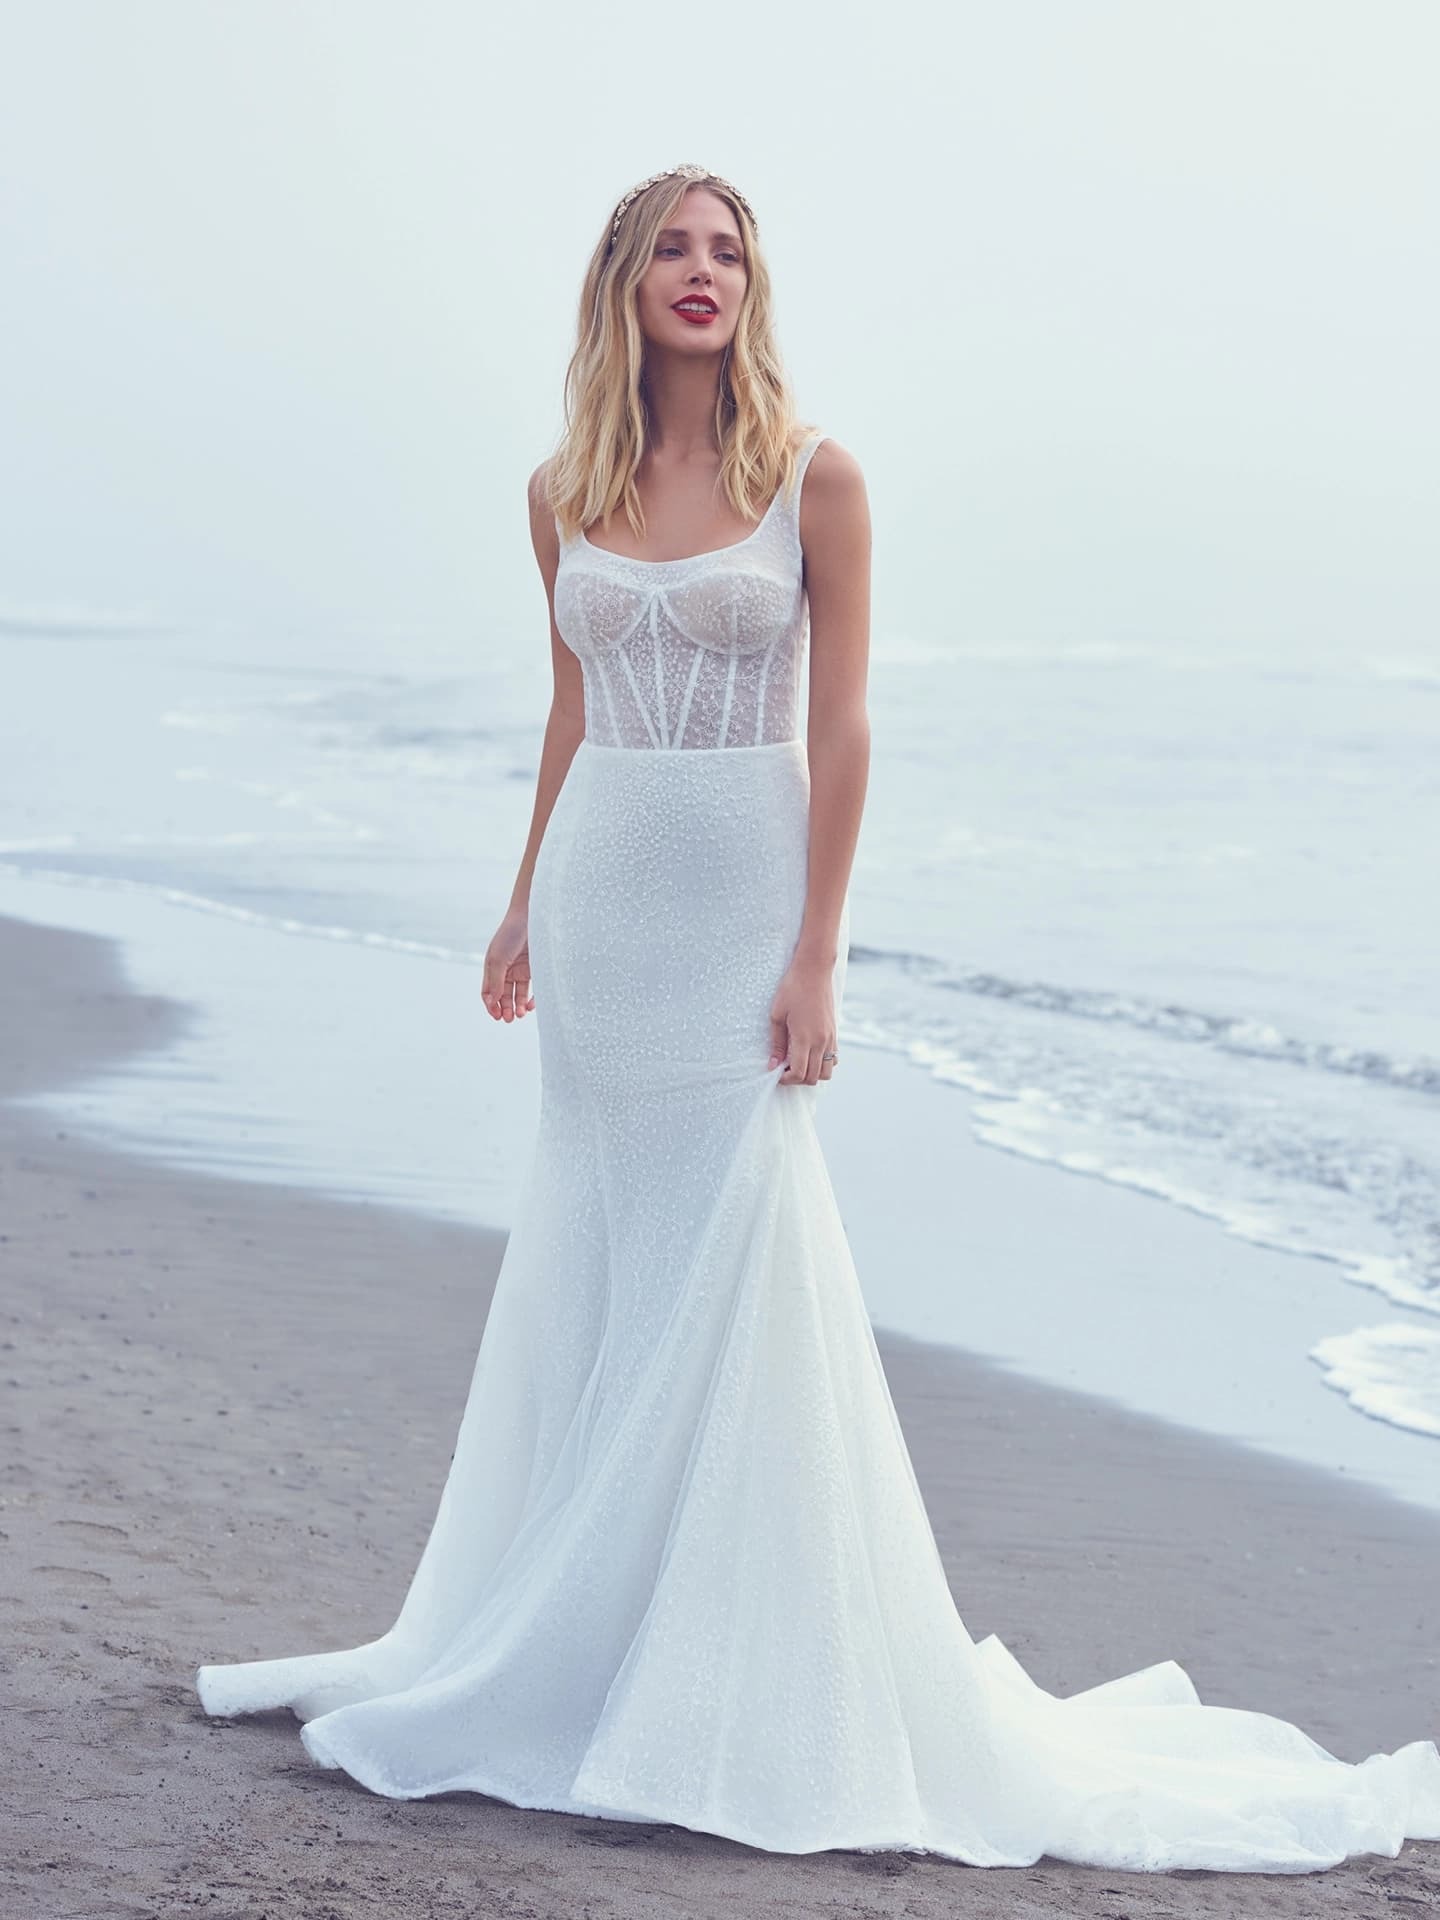 Model wearing a gown by Sottero & Midgley. Desktop image